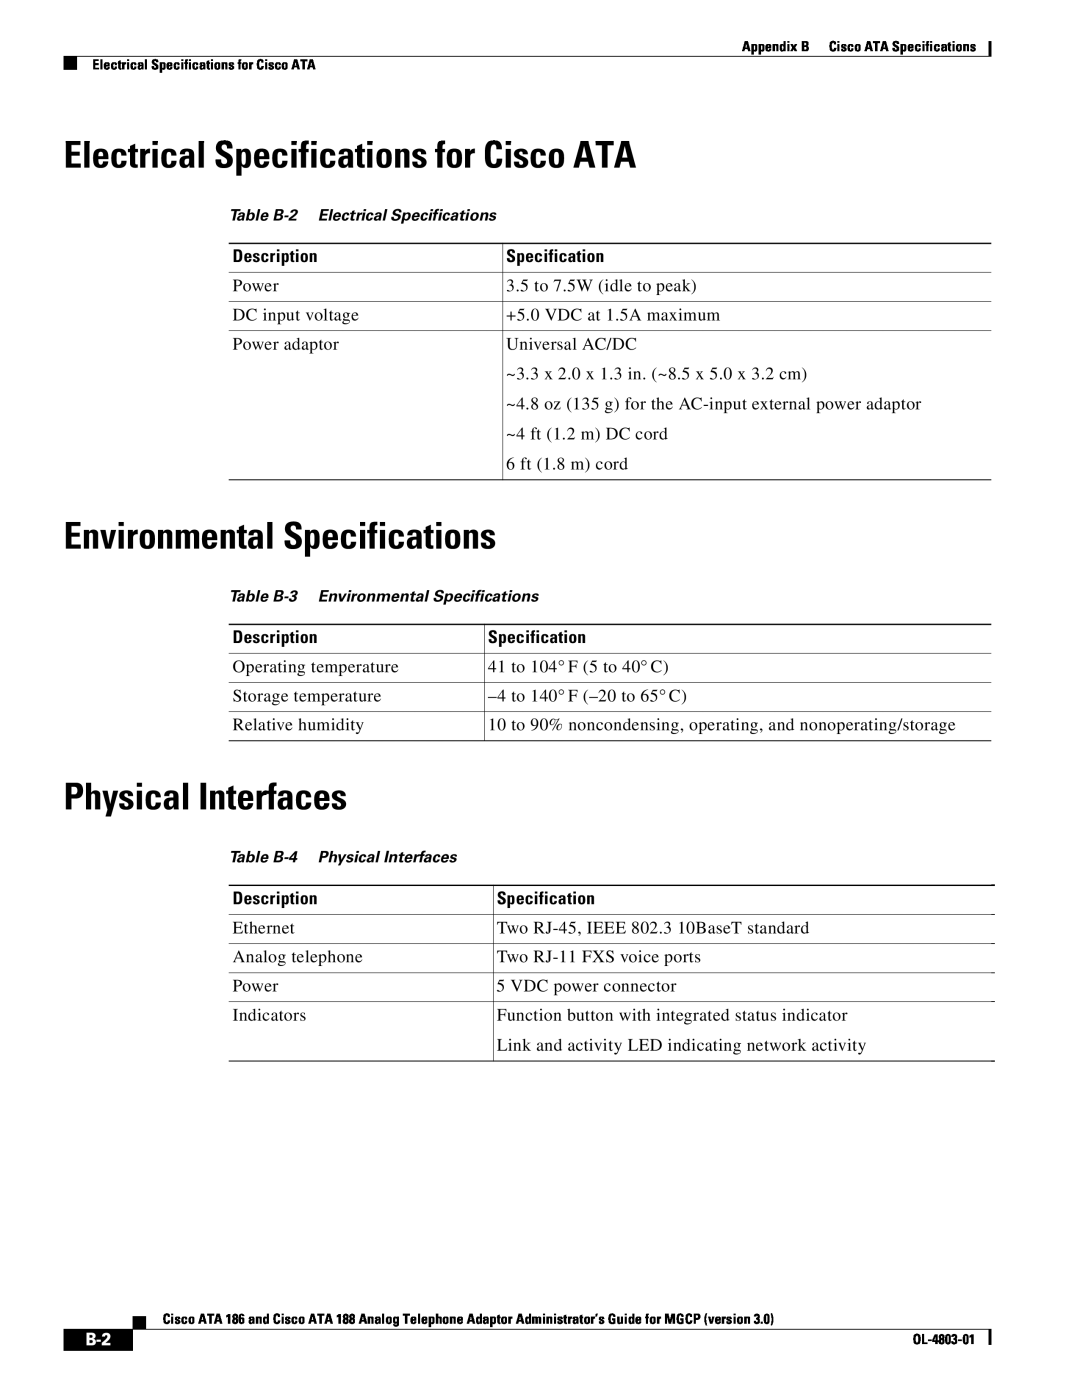 Cisco Systems ATA 186 manual Electrical Specifications for Cisco ATA, Environmental Specifications, Physical Interfaces 